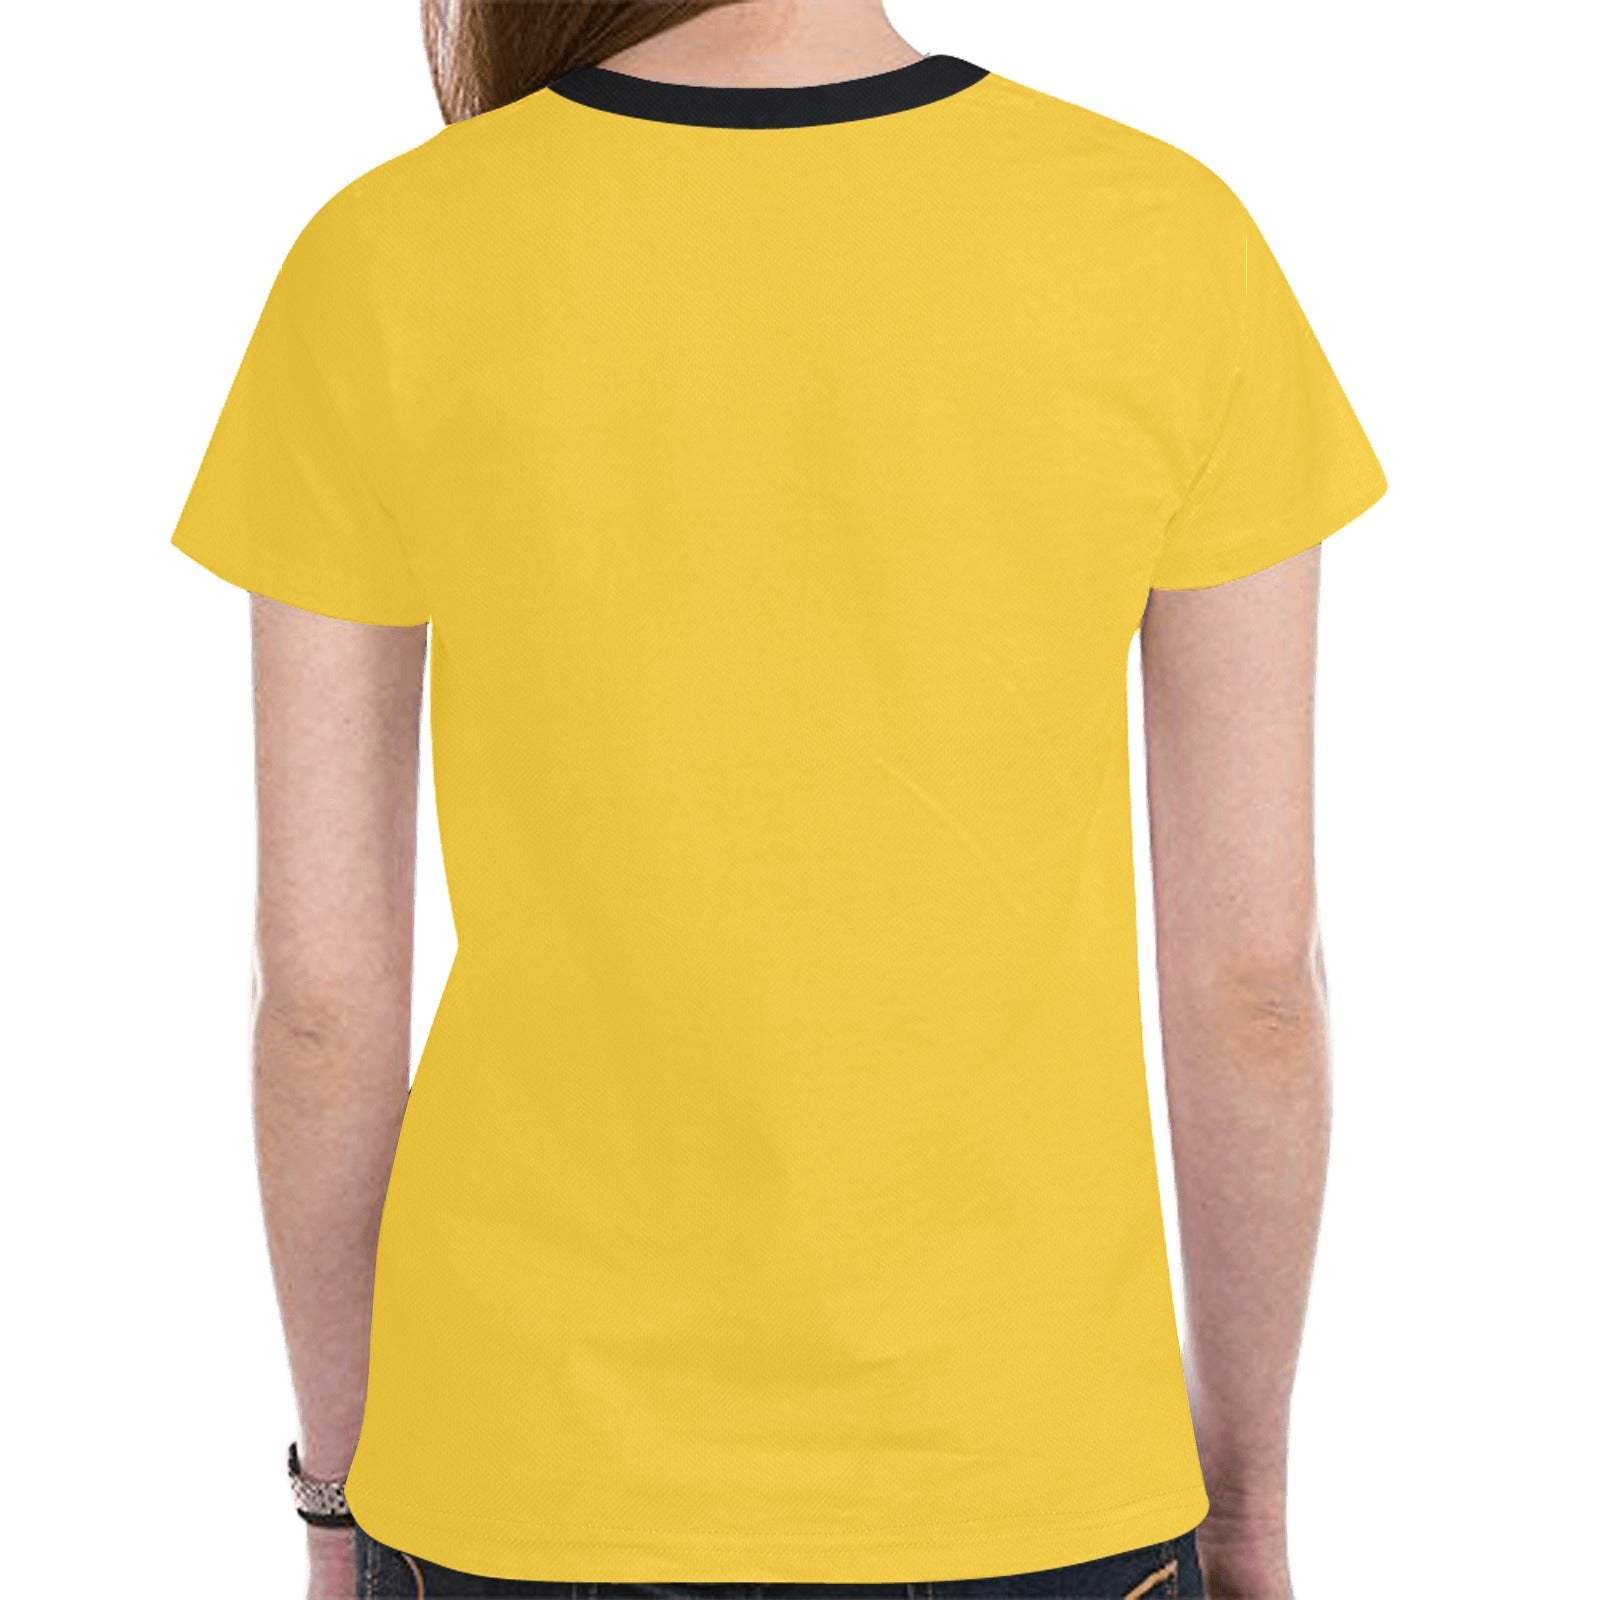 Elk Spirit Guide (Yellow) T-shirt for Women